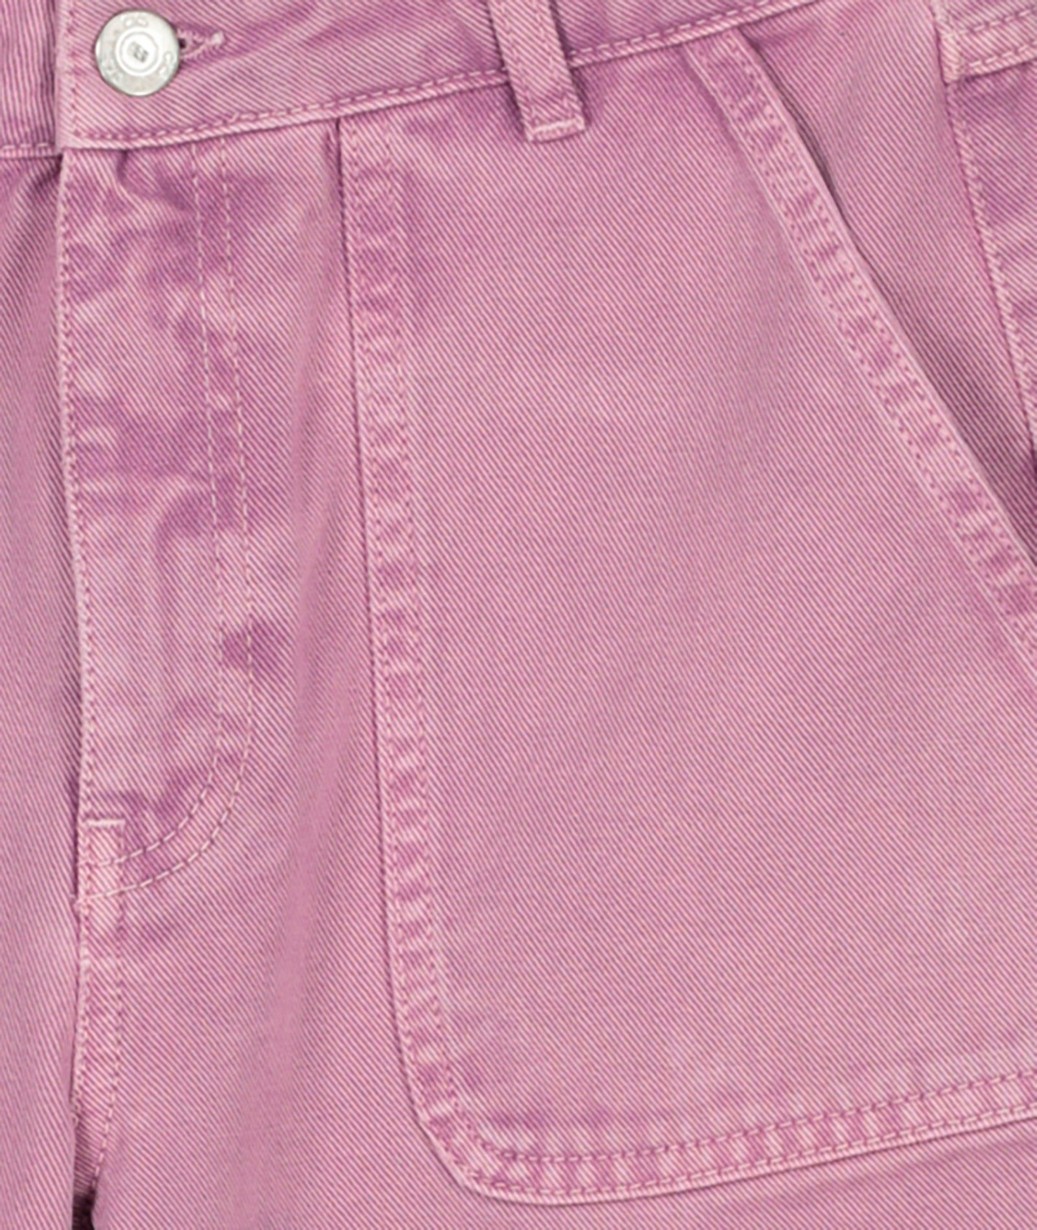 CKS Dames - LARENTINA - cropped jeans - multicolor